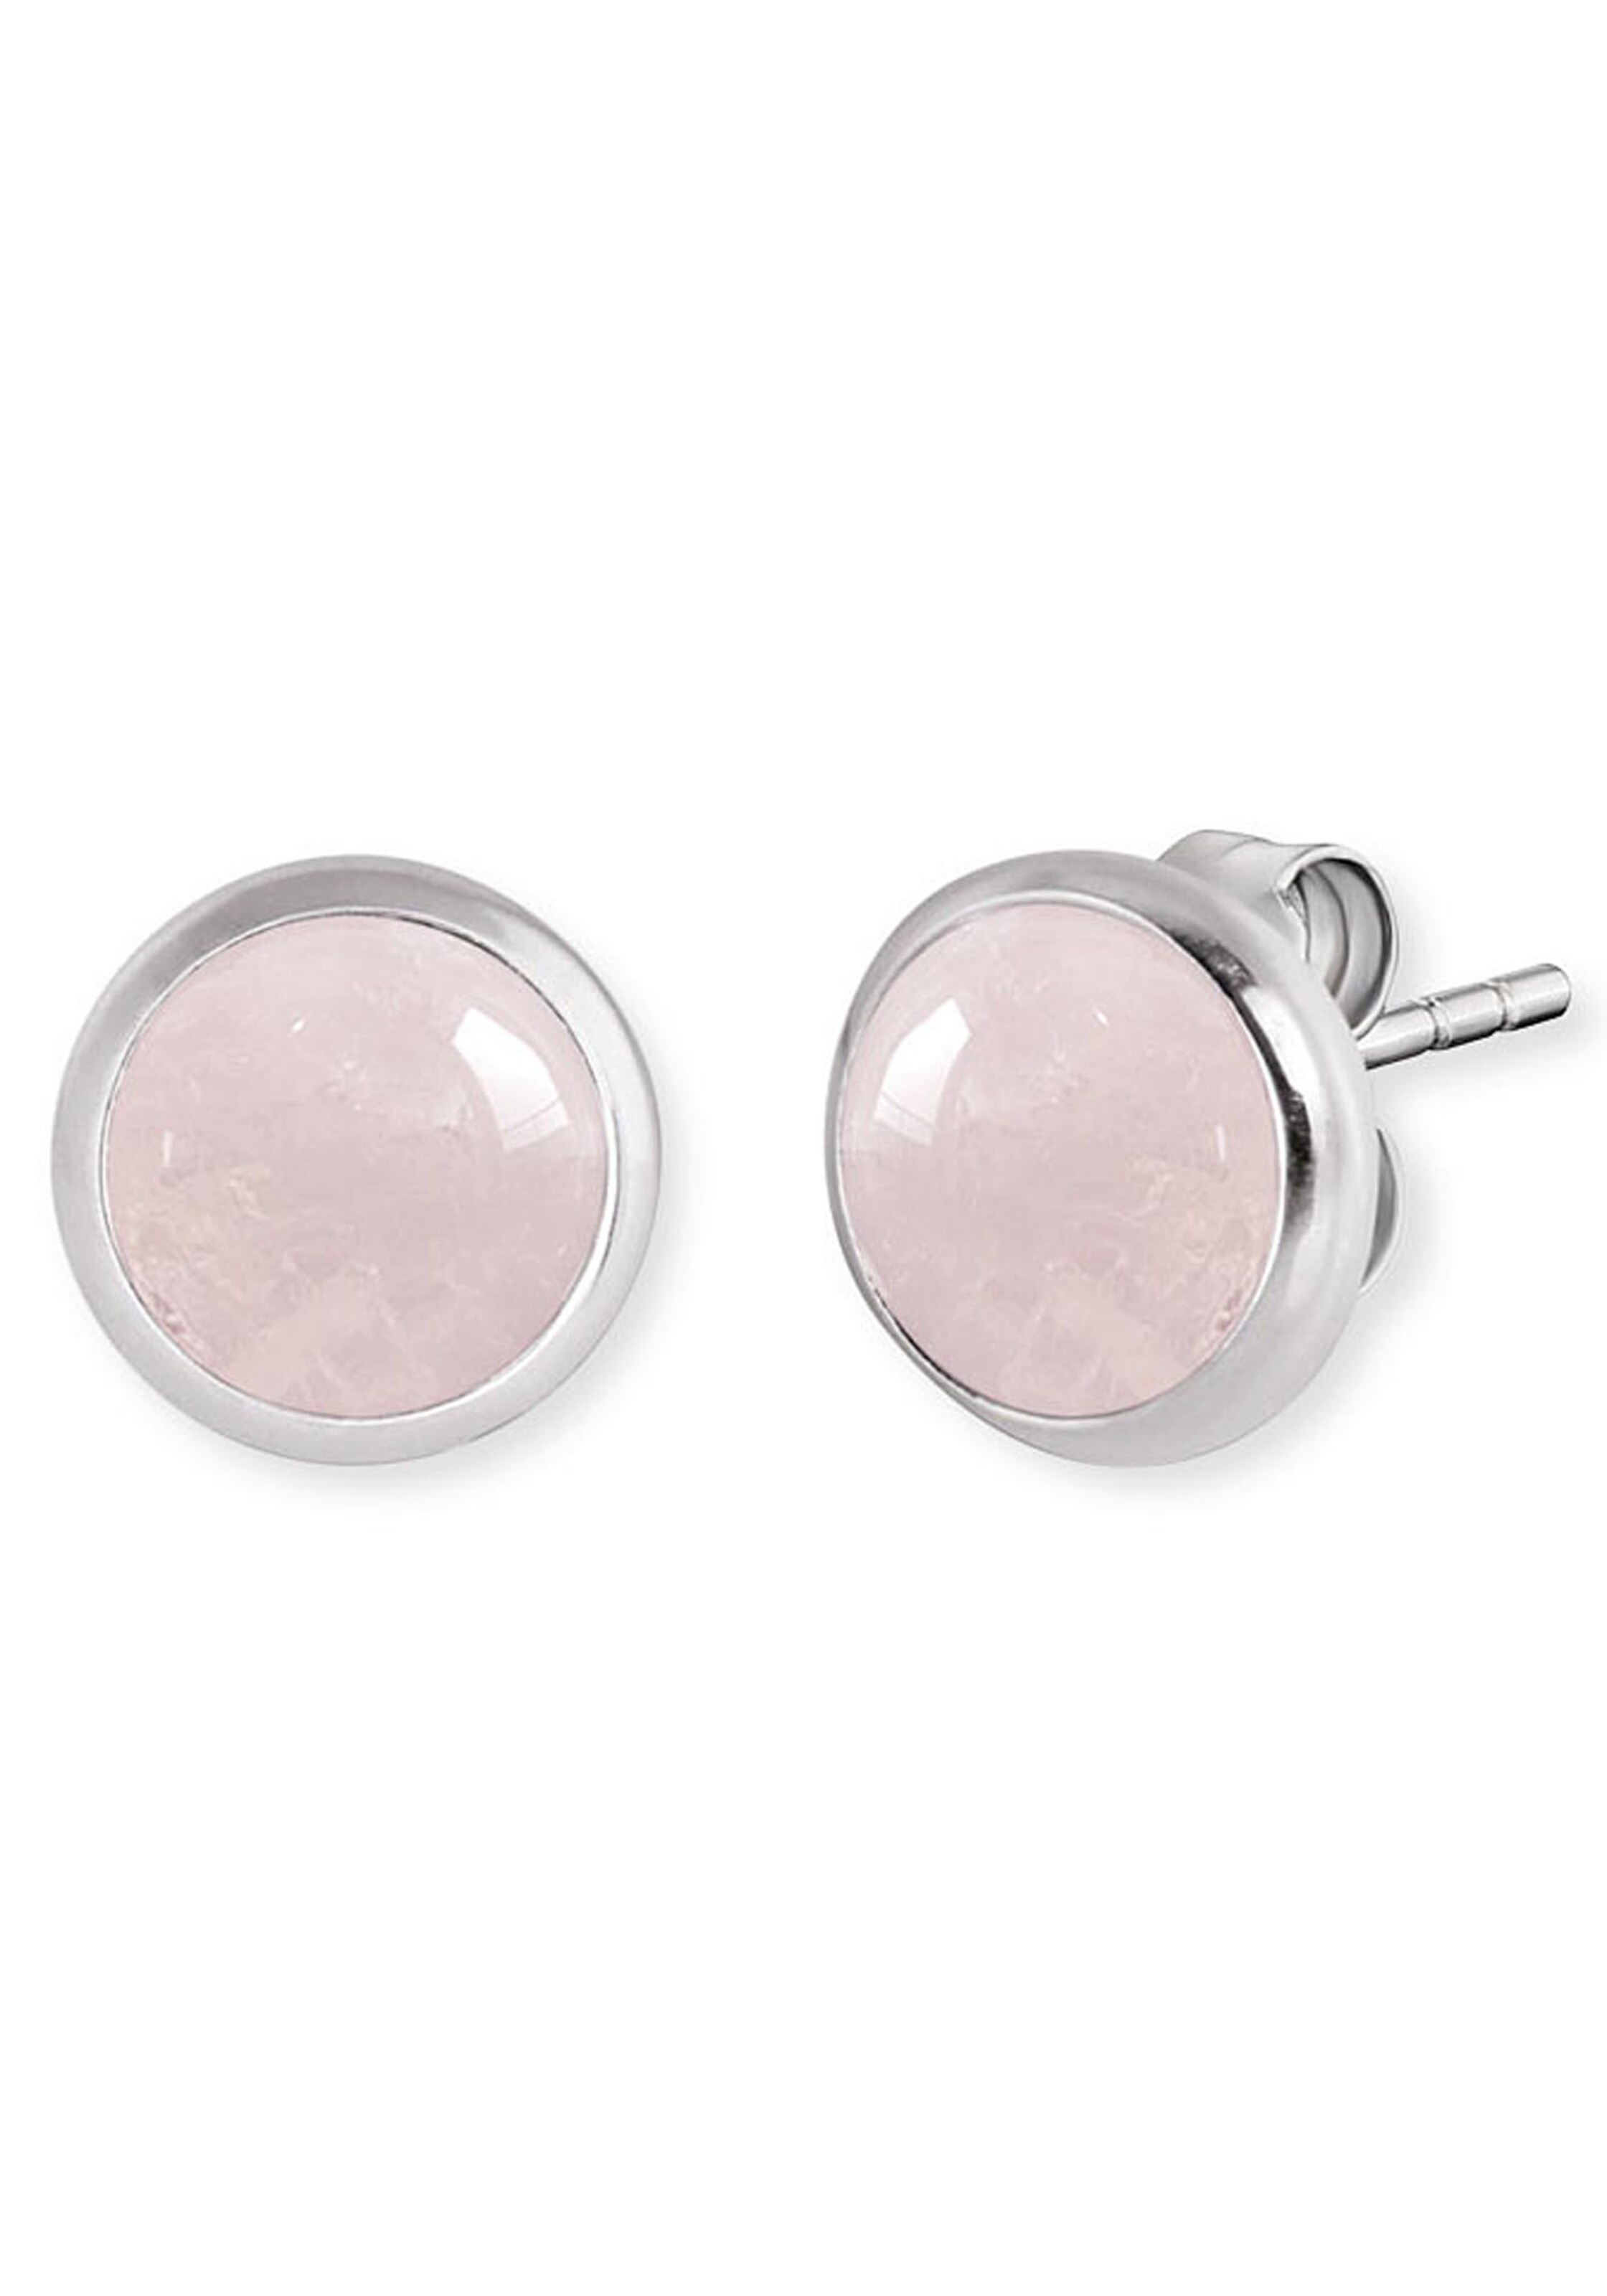 Accessoires Ohrringe Engelsrufer Paar Ohrstecker in silberfarben-pink 